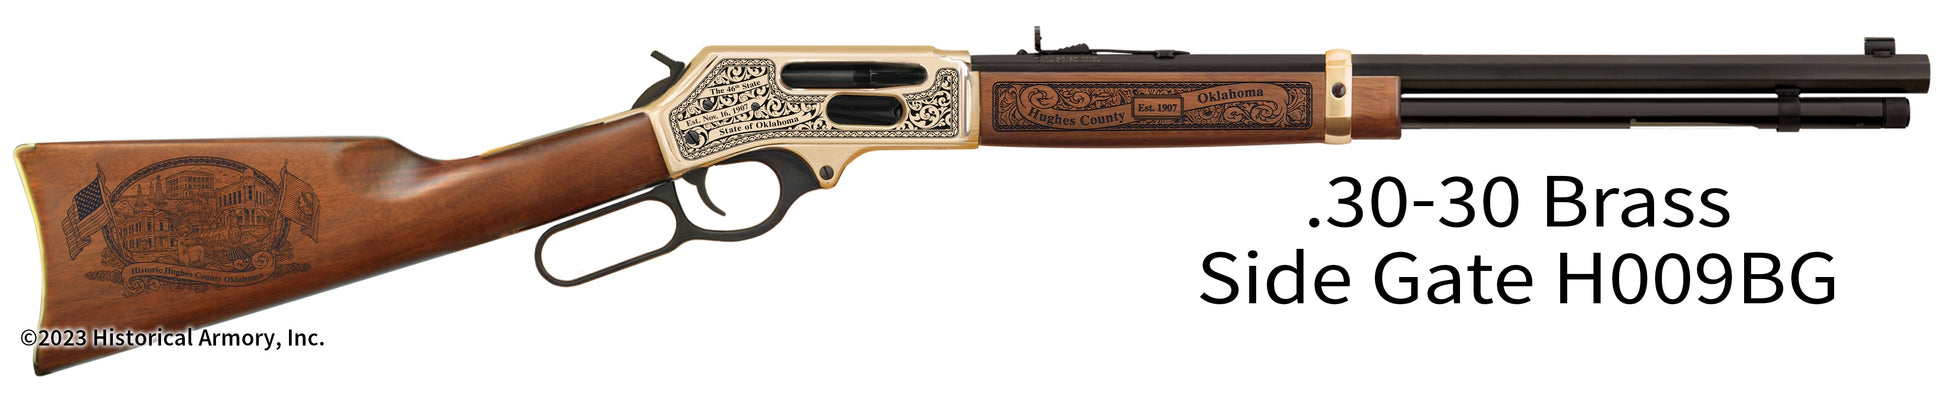 Hughes County Oklahoma Engraved Henry .30-30 Brass Side Gate Rifle